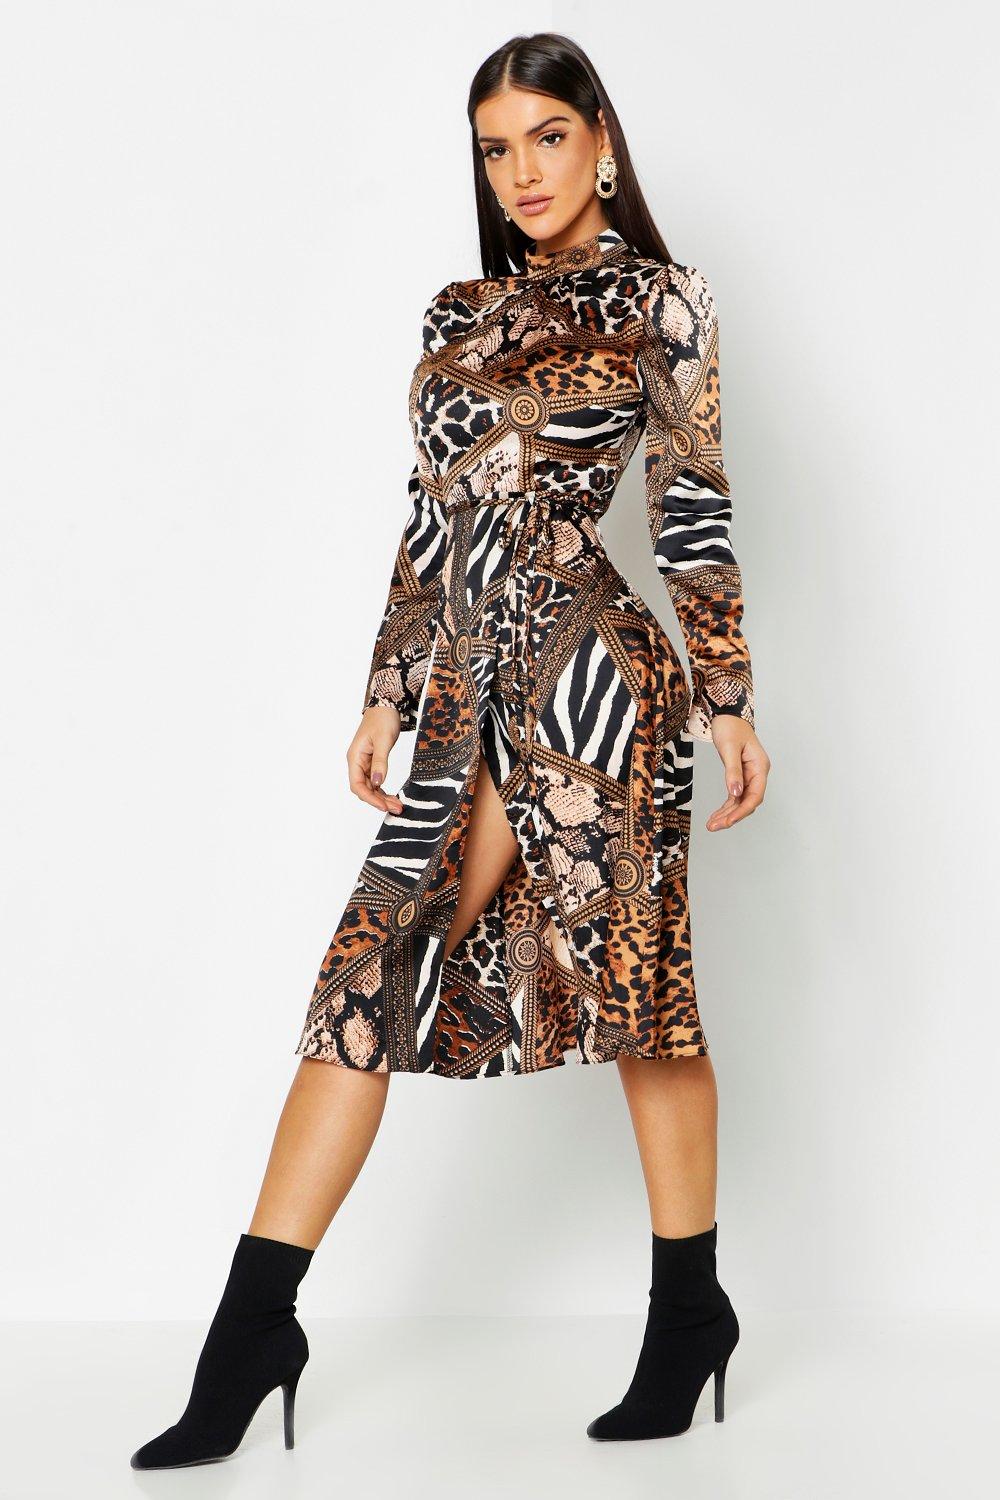 h&m tiger print dress